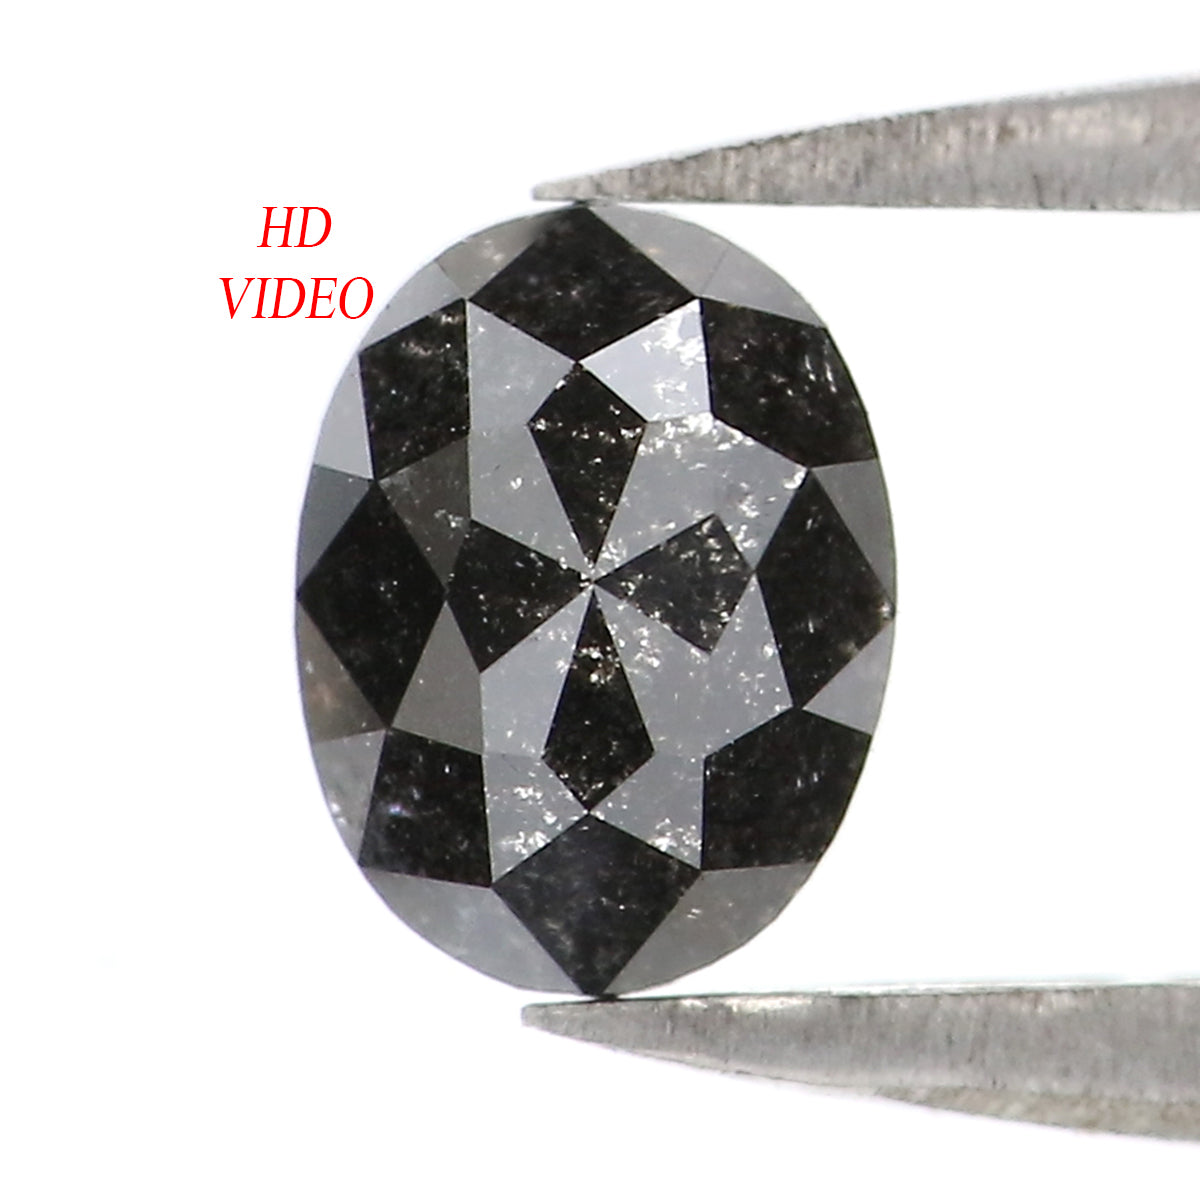 0.74 CT Natural Loose Oval Shape Diamond Salt And Pepper Oval Rose Cut Diamond 6.05 MM Black Grey Color Oval Shape Rose Cut Diamond QL1911